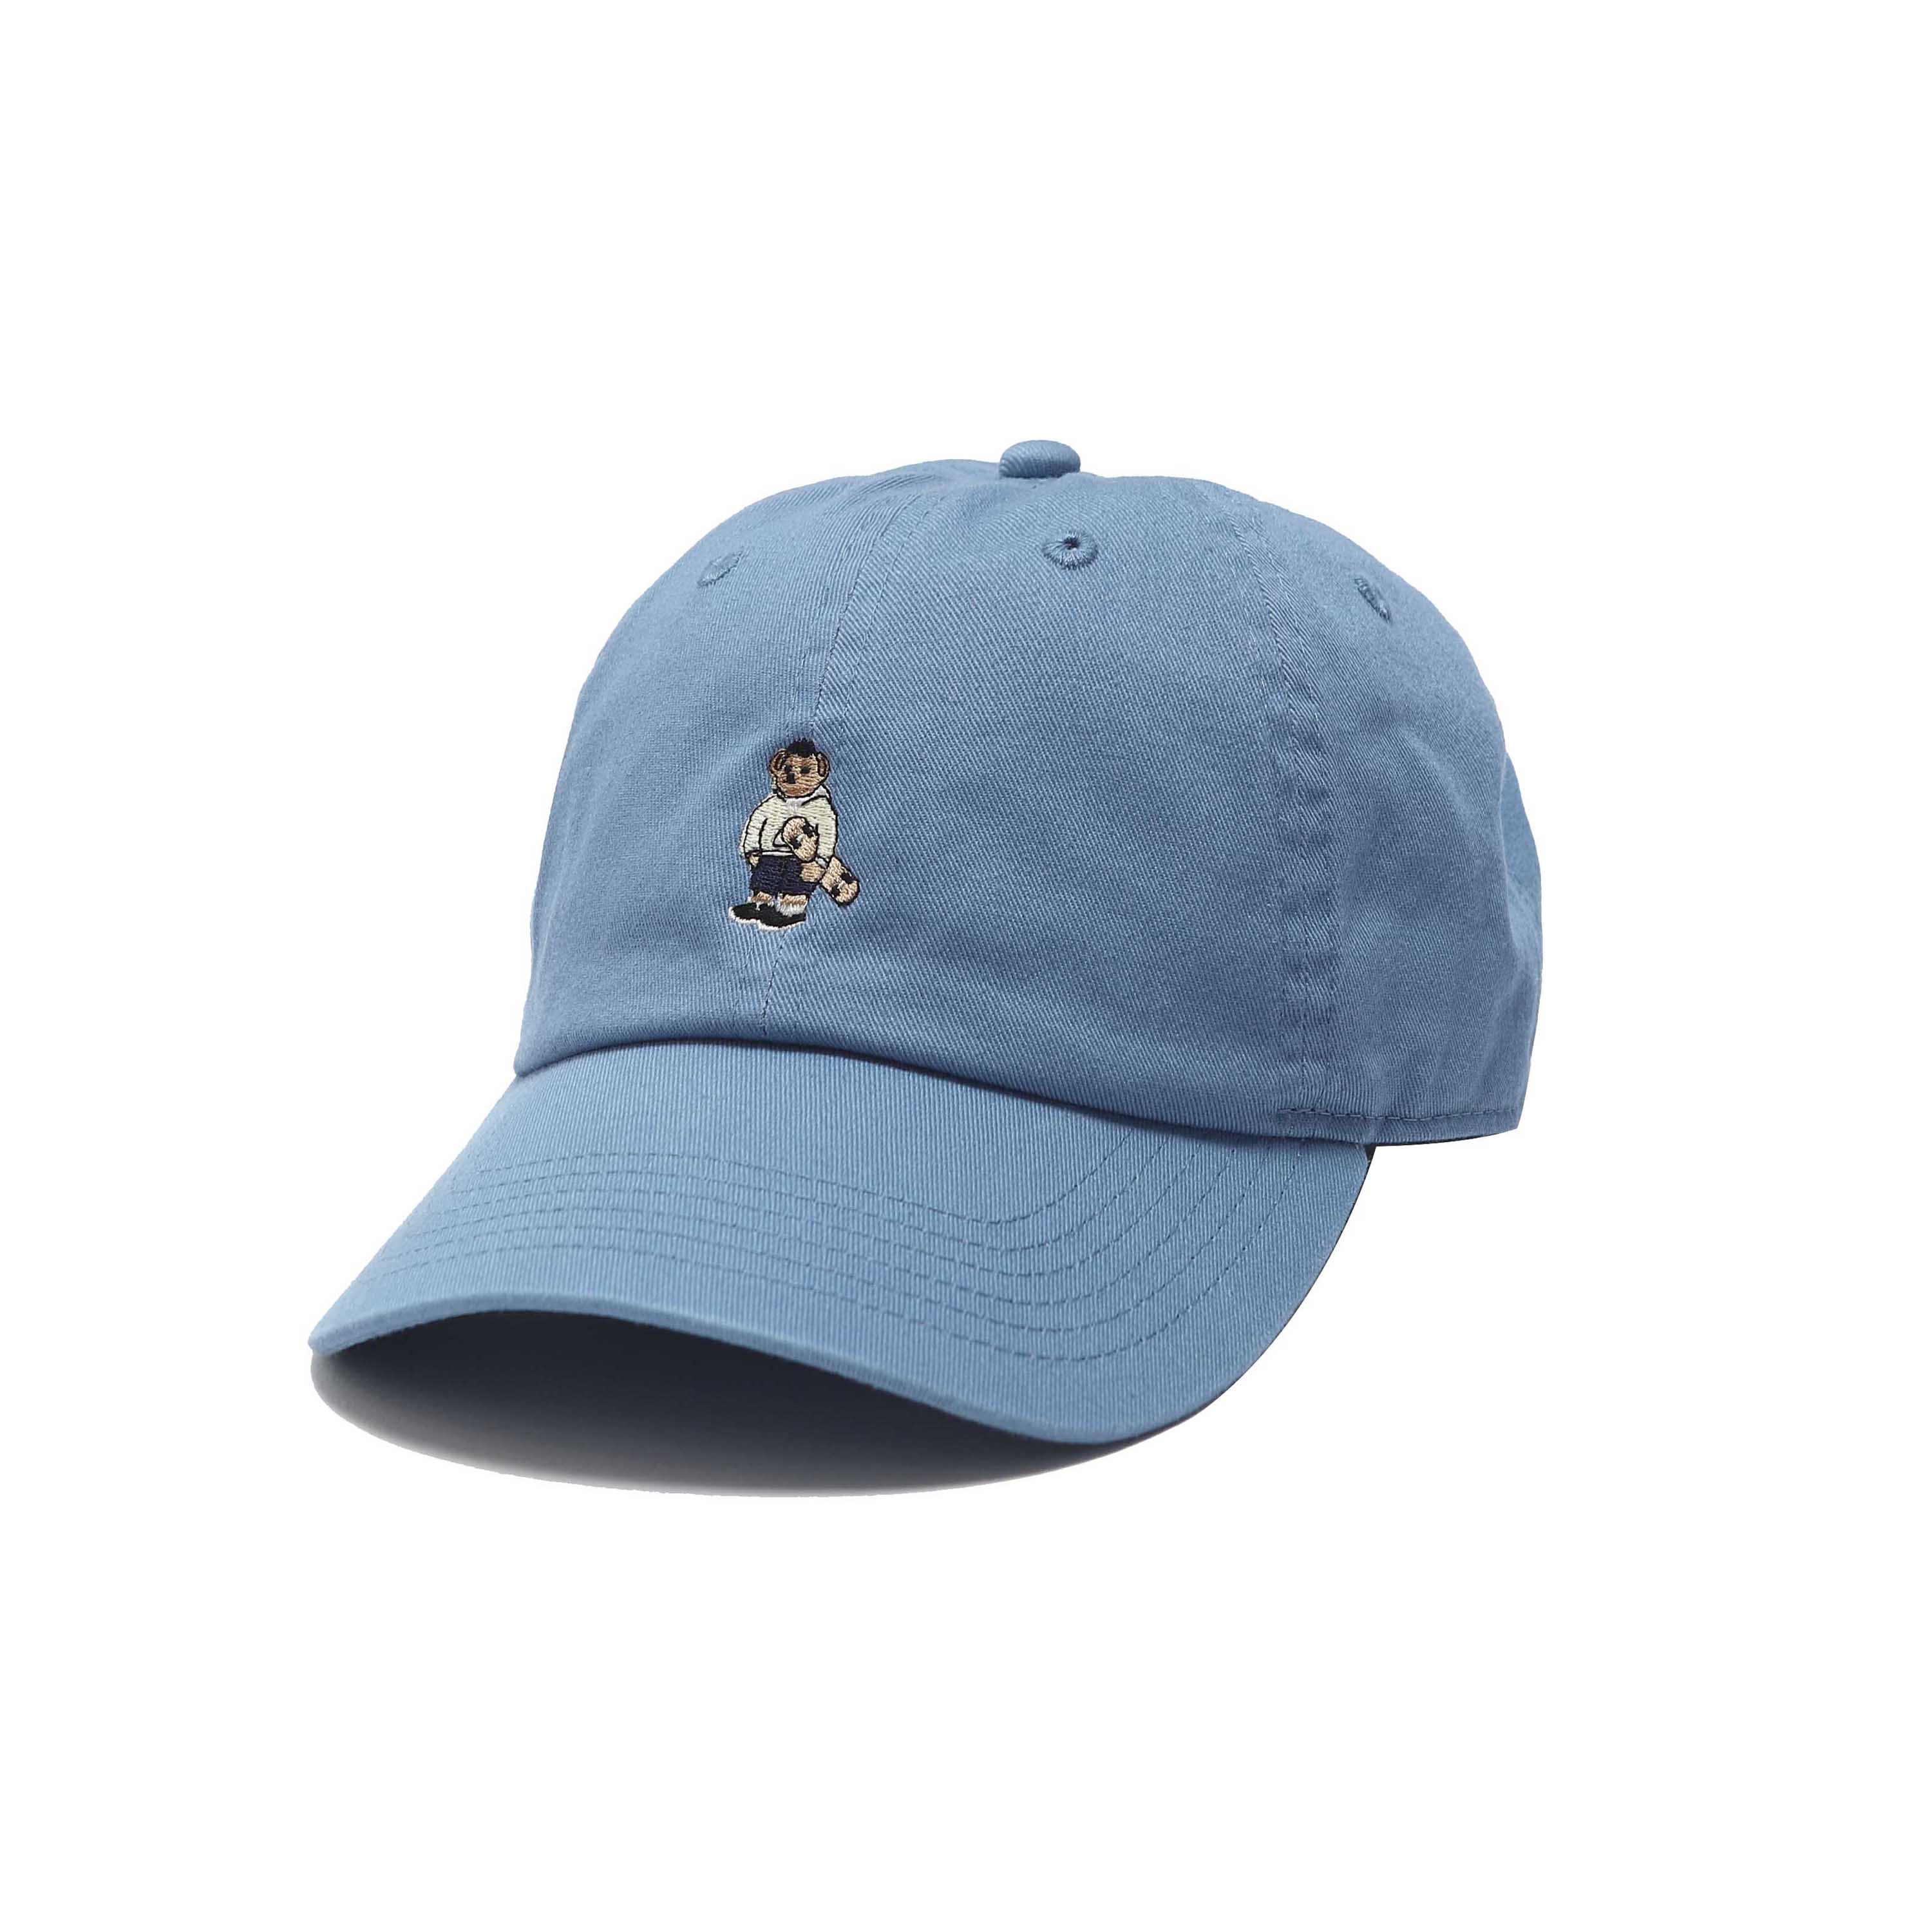 ROSTER BEAR SK8 CAP - SKY BLUE